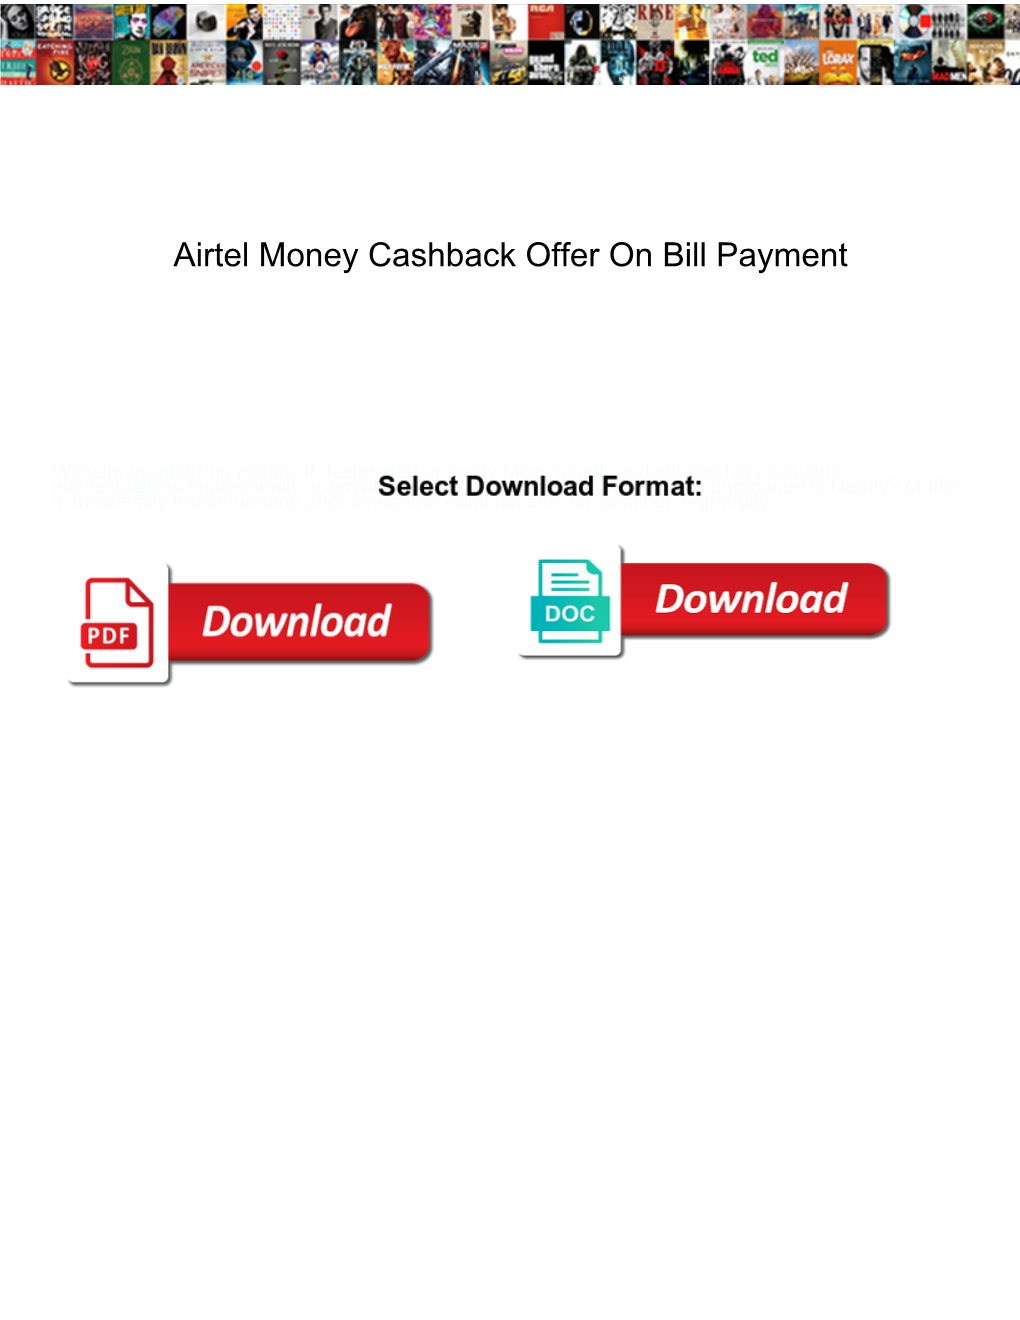 Airtel Money Cashback Offer on Bill Payment